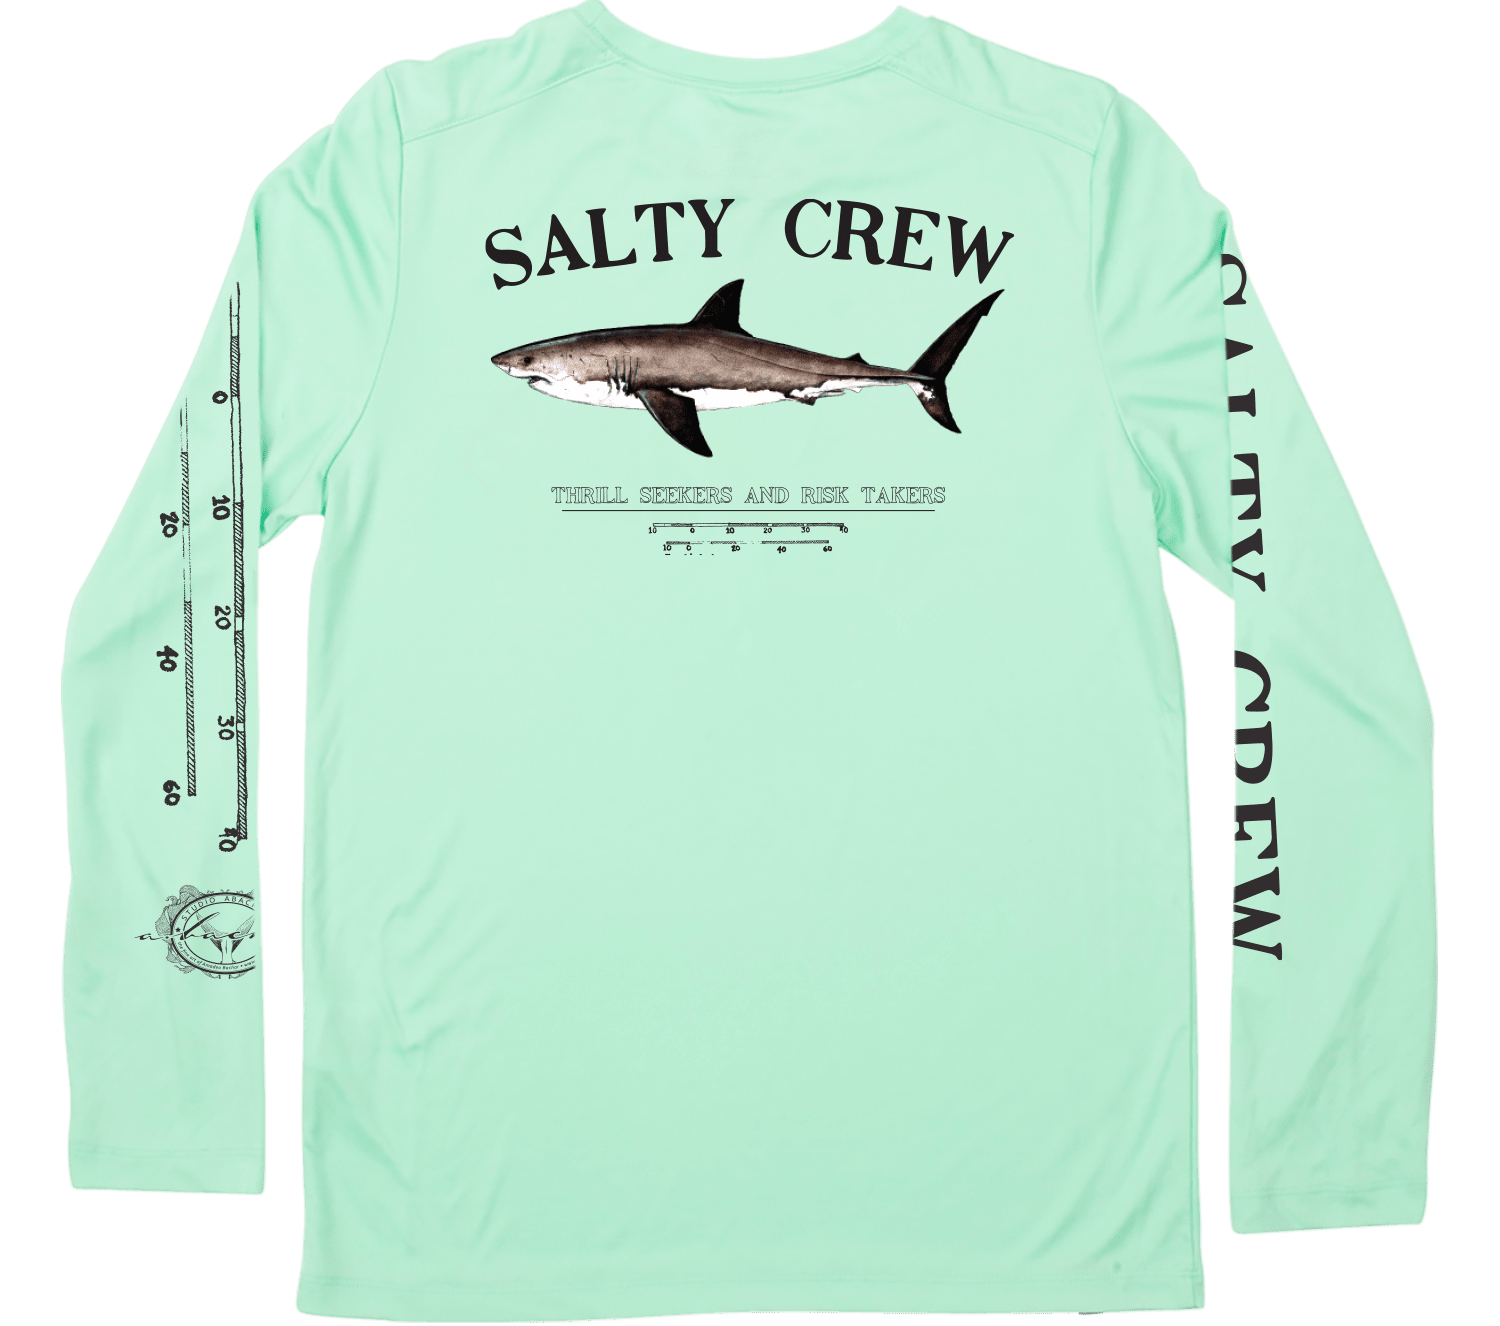 SALTY CREW Boys Bruce Long Sleeve Surf Shirt Sea Foam Youth Rashguards Salty Crew 